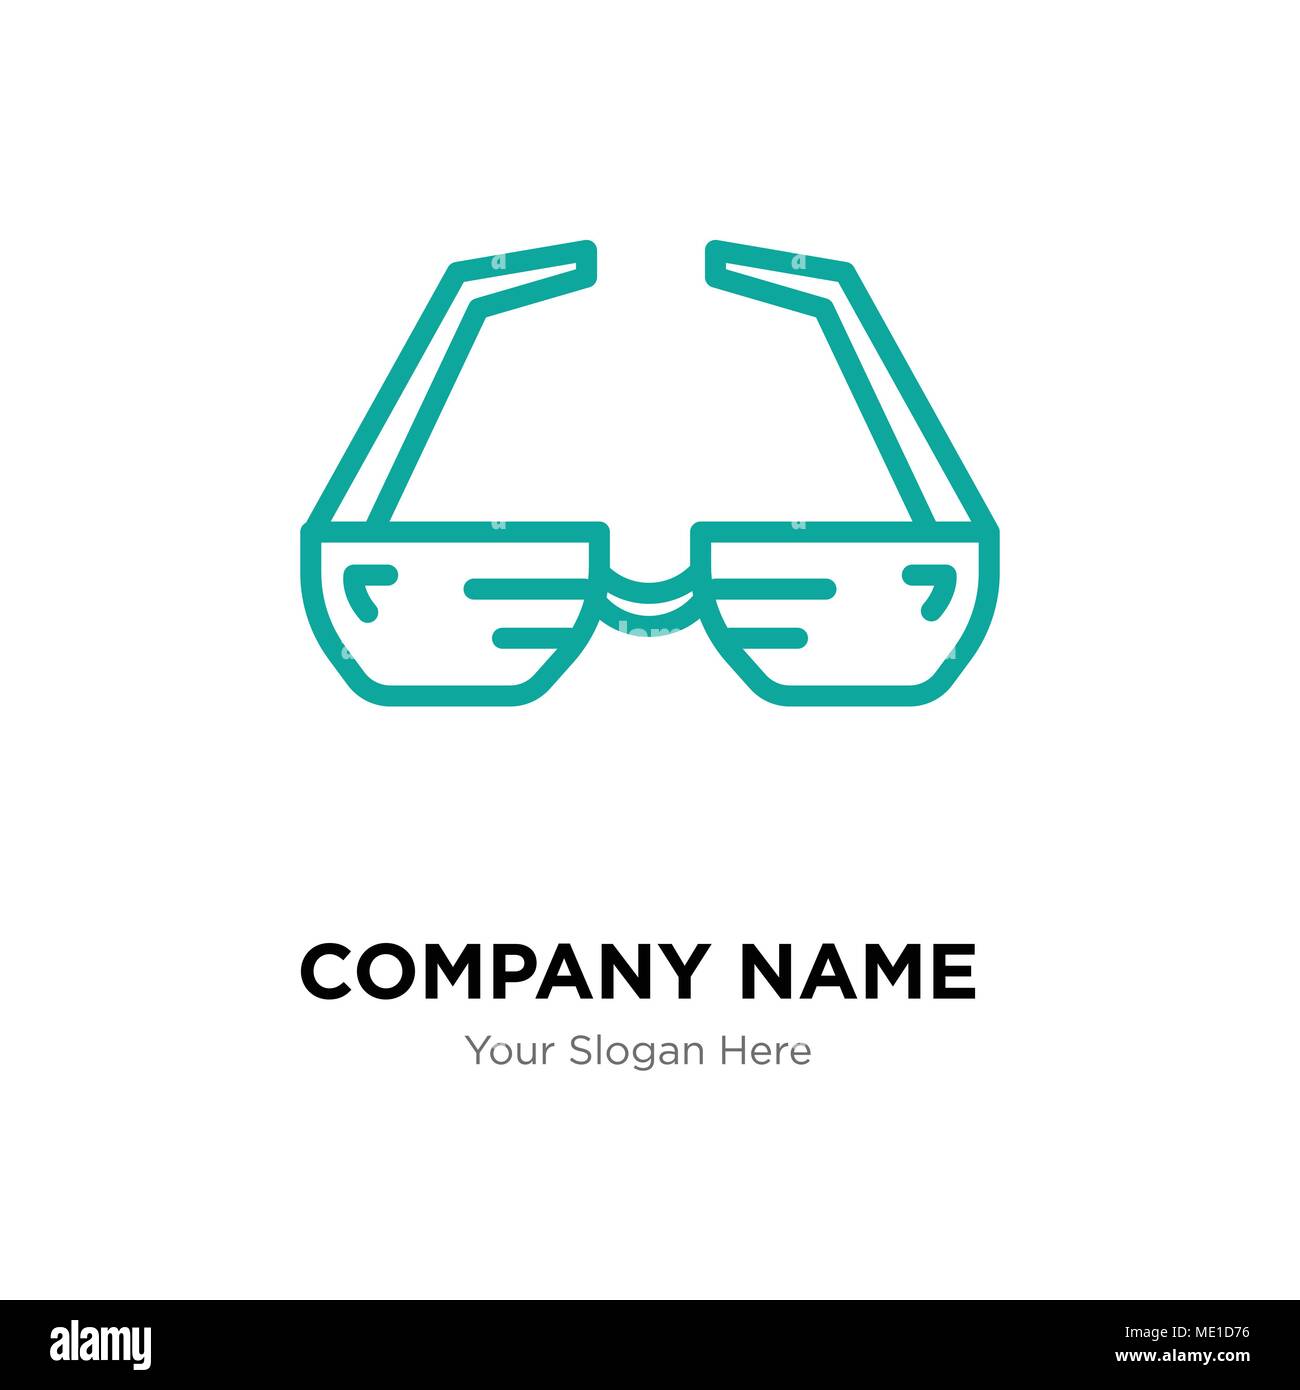 3d glasses company logo design template, Business corporate vector icon  Stock Vector Image & Art - Alamy